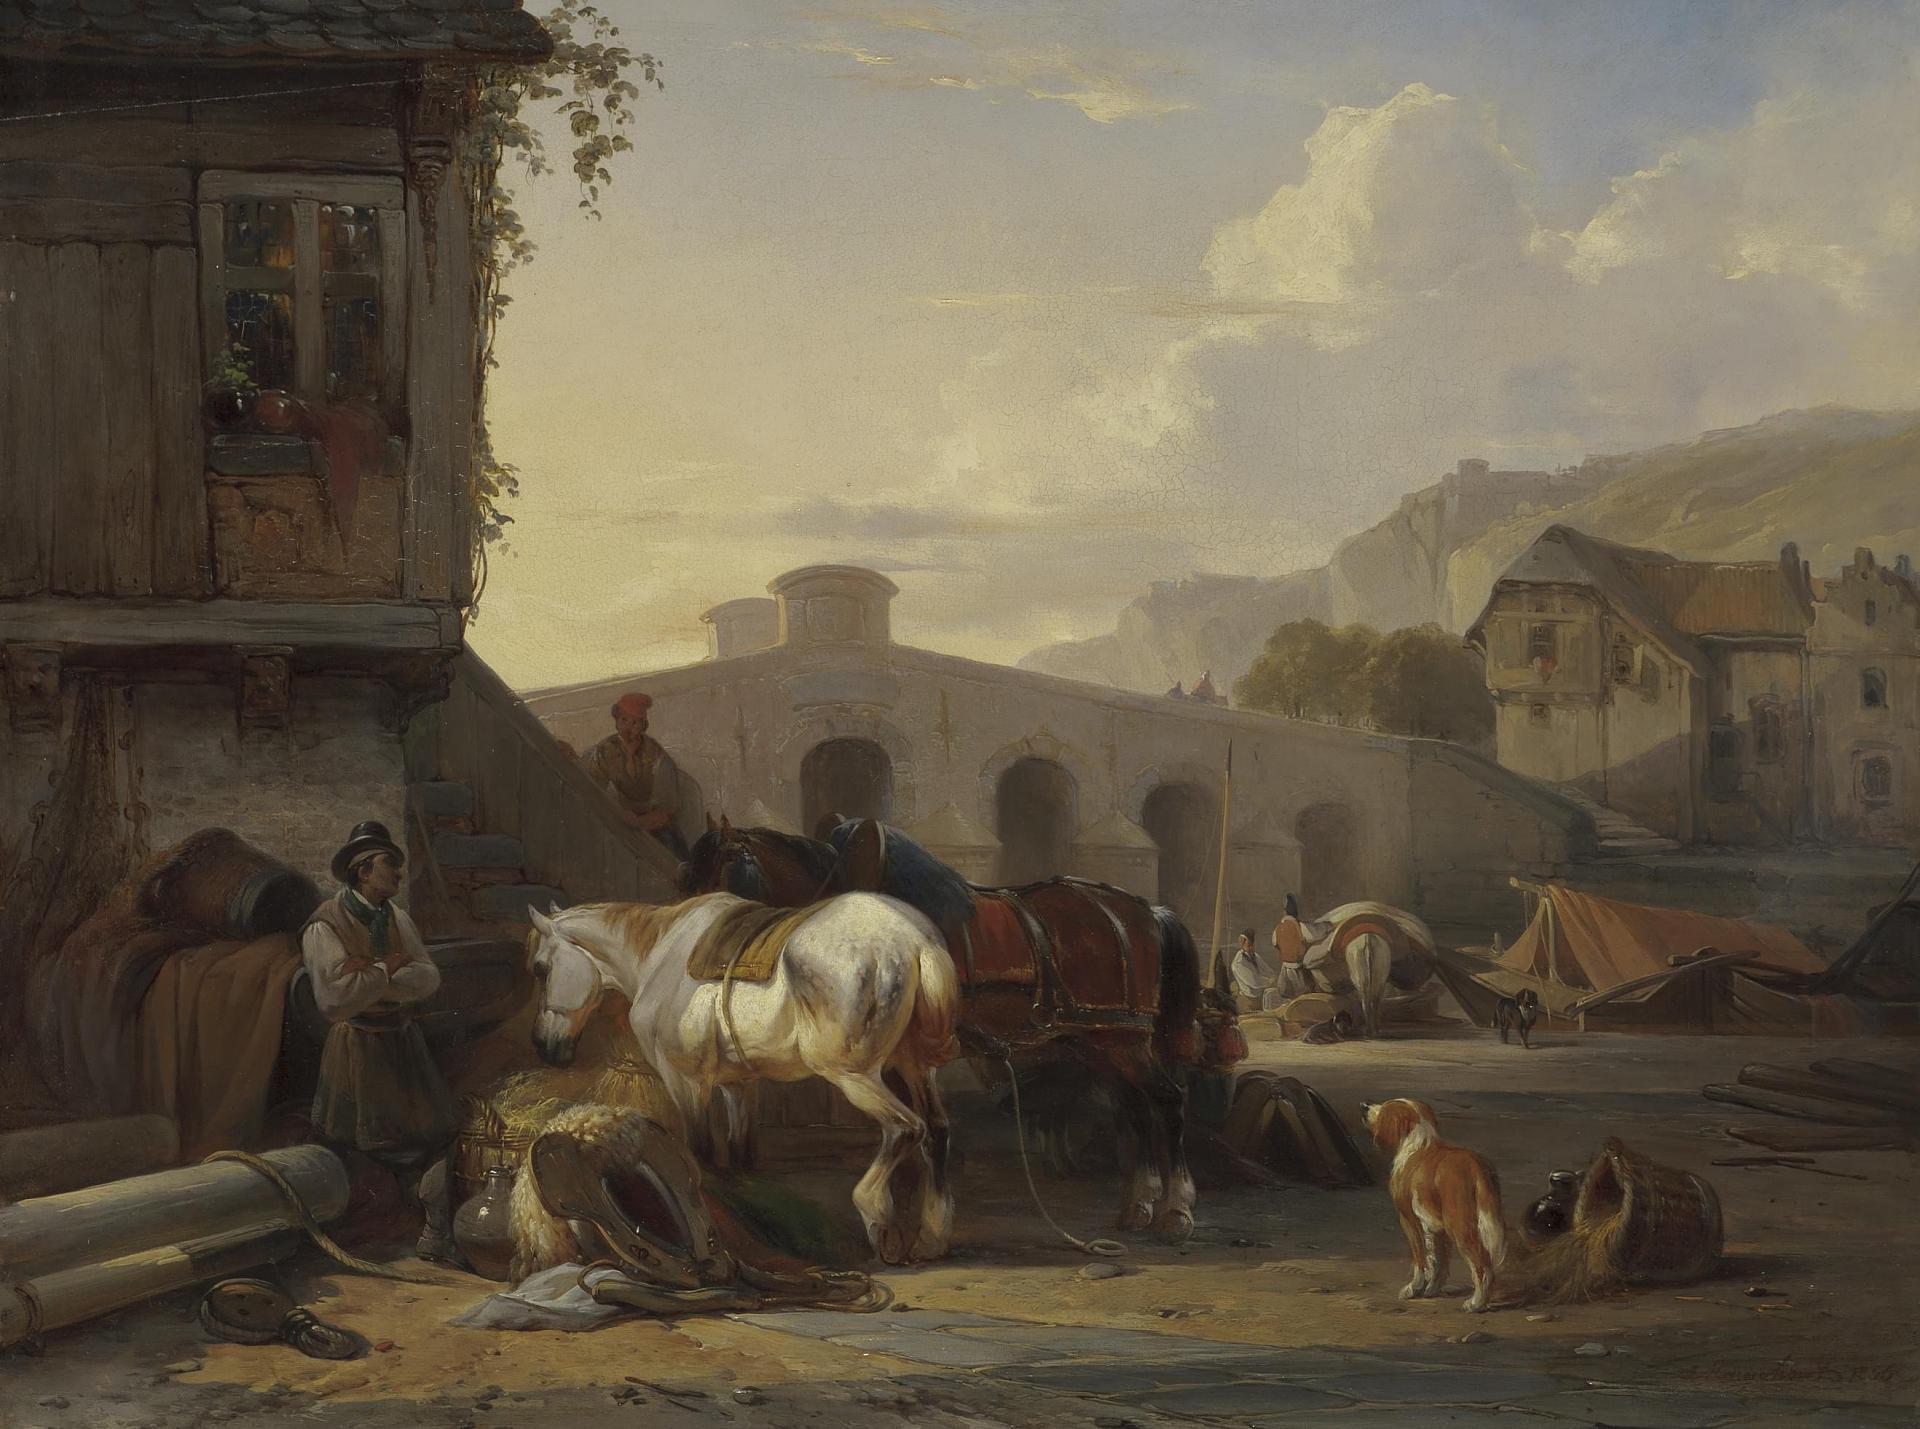 Жлзеф Йодокус Мёренхаут. "Извозчик, кормящий лошадей". 1836. Эрмитаж, Санкт-Петербург.